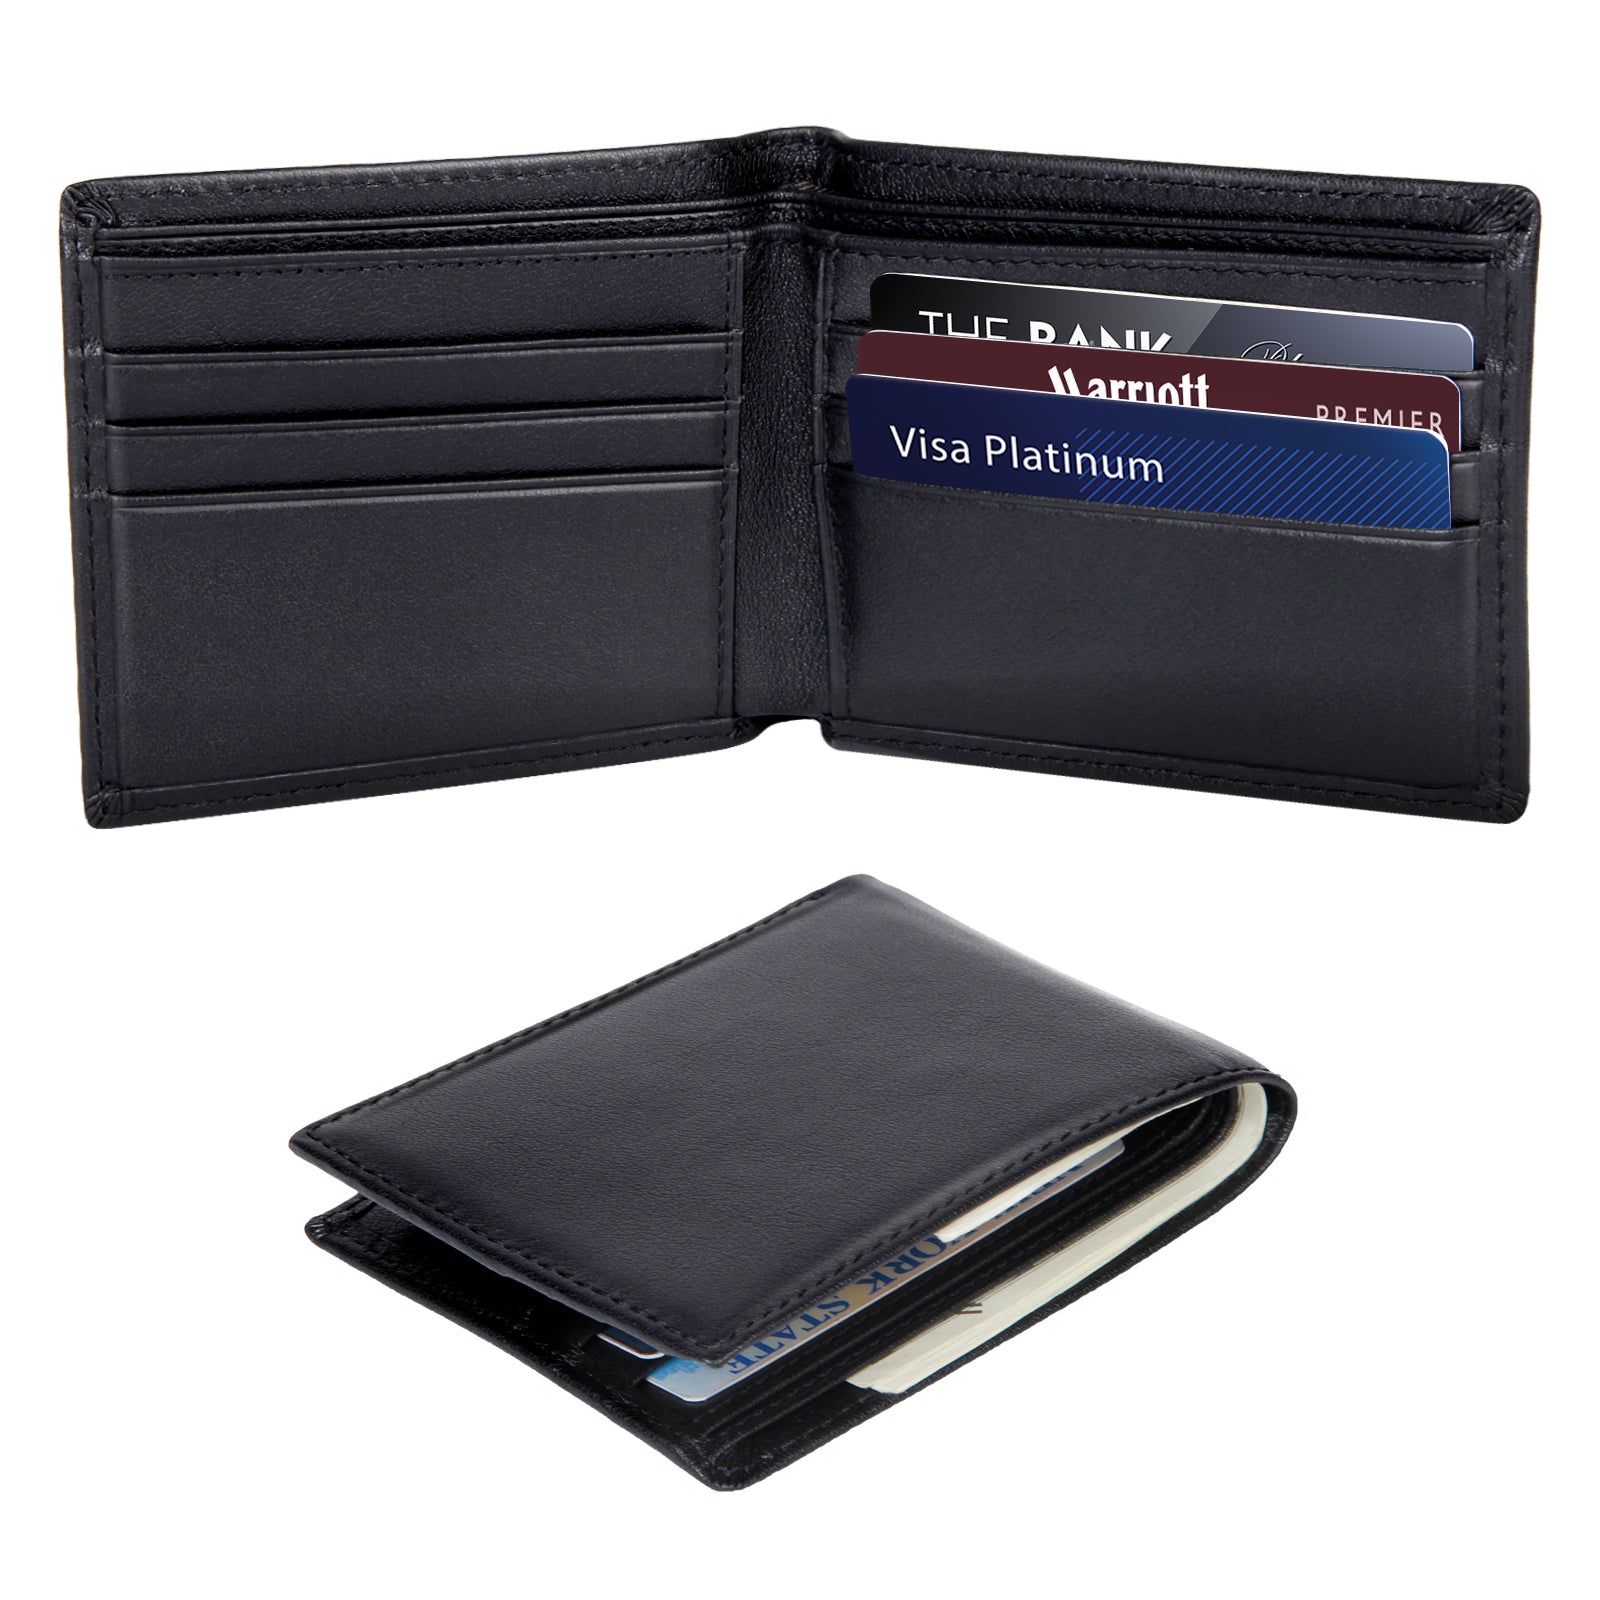 Women's Slim Vintage Leather Bifold Wallet